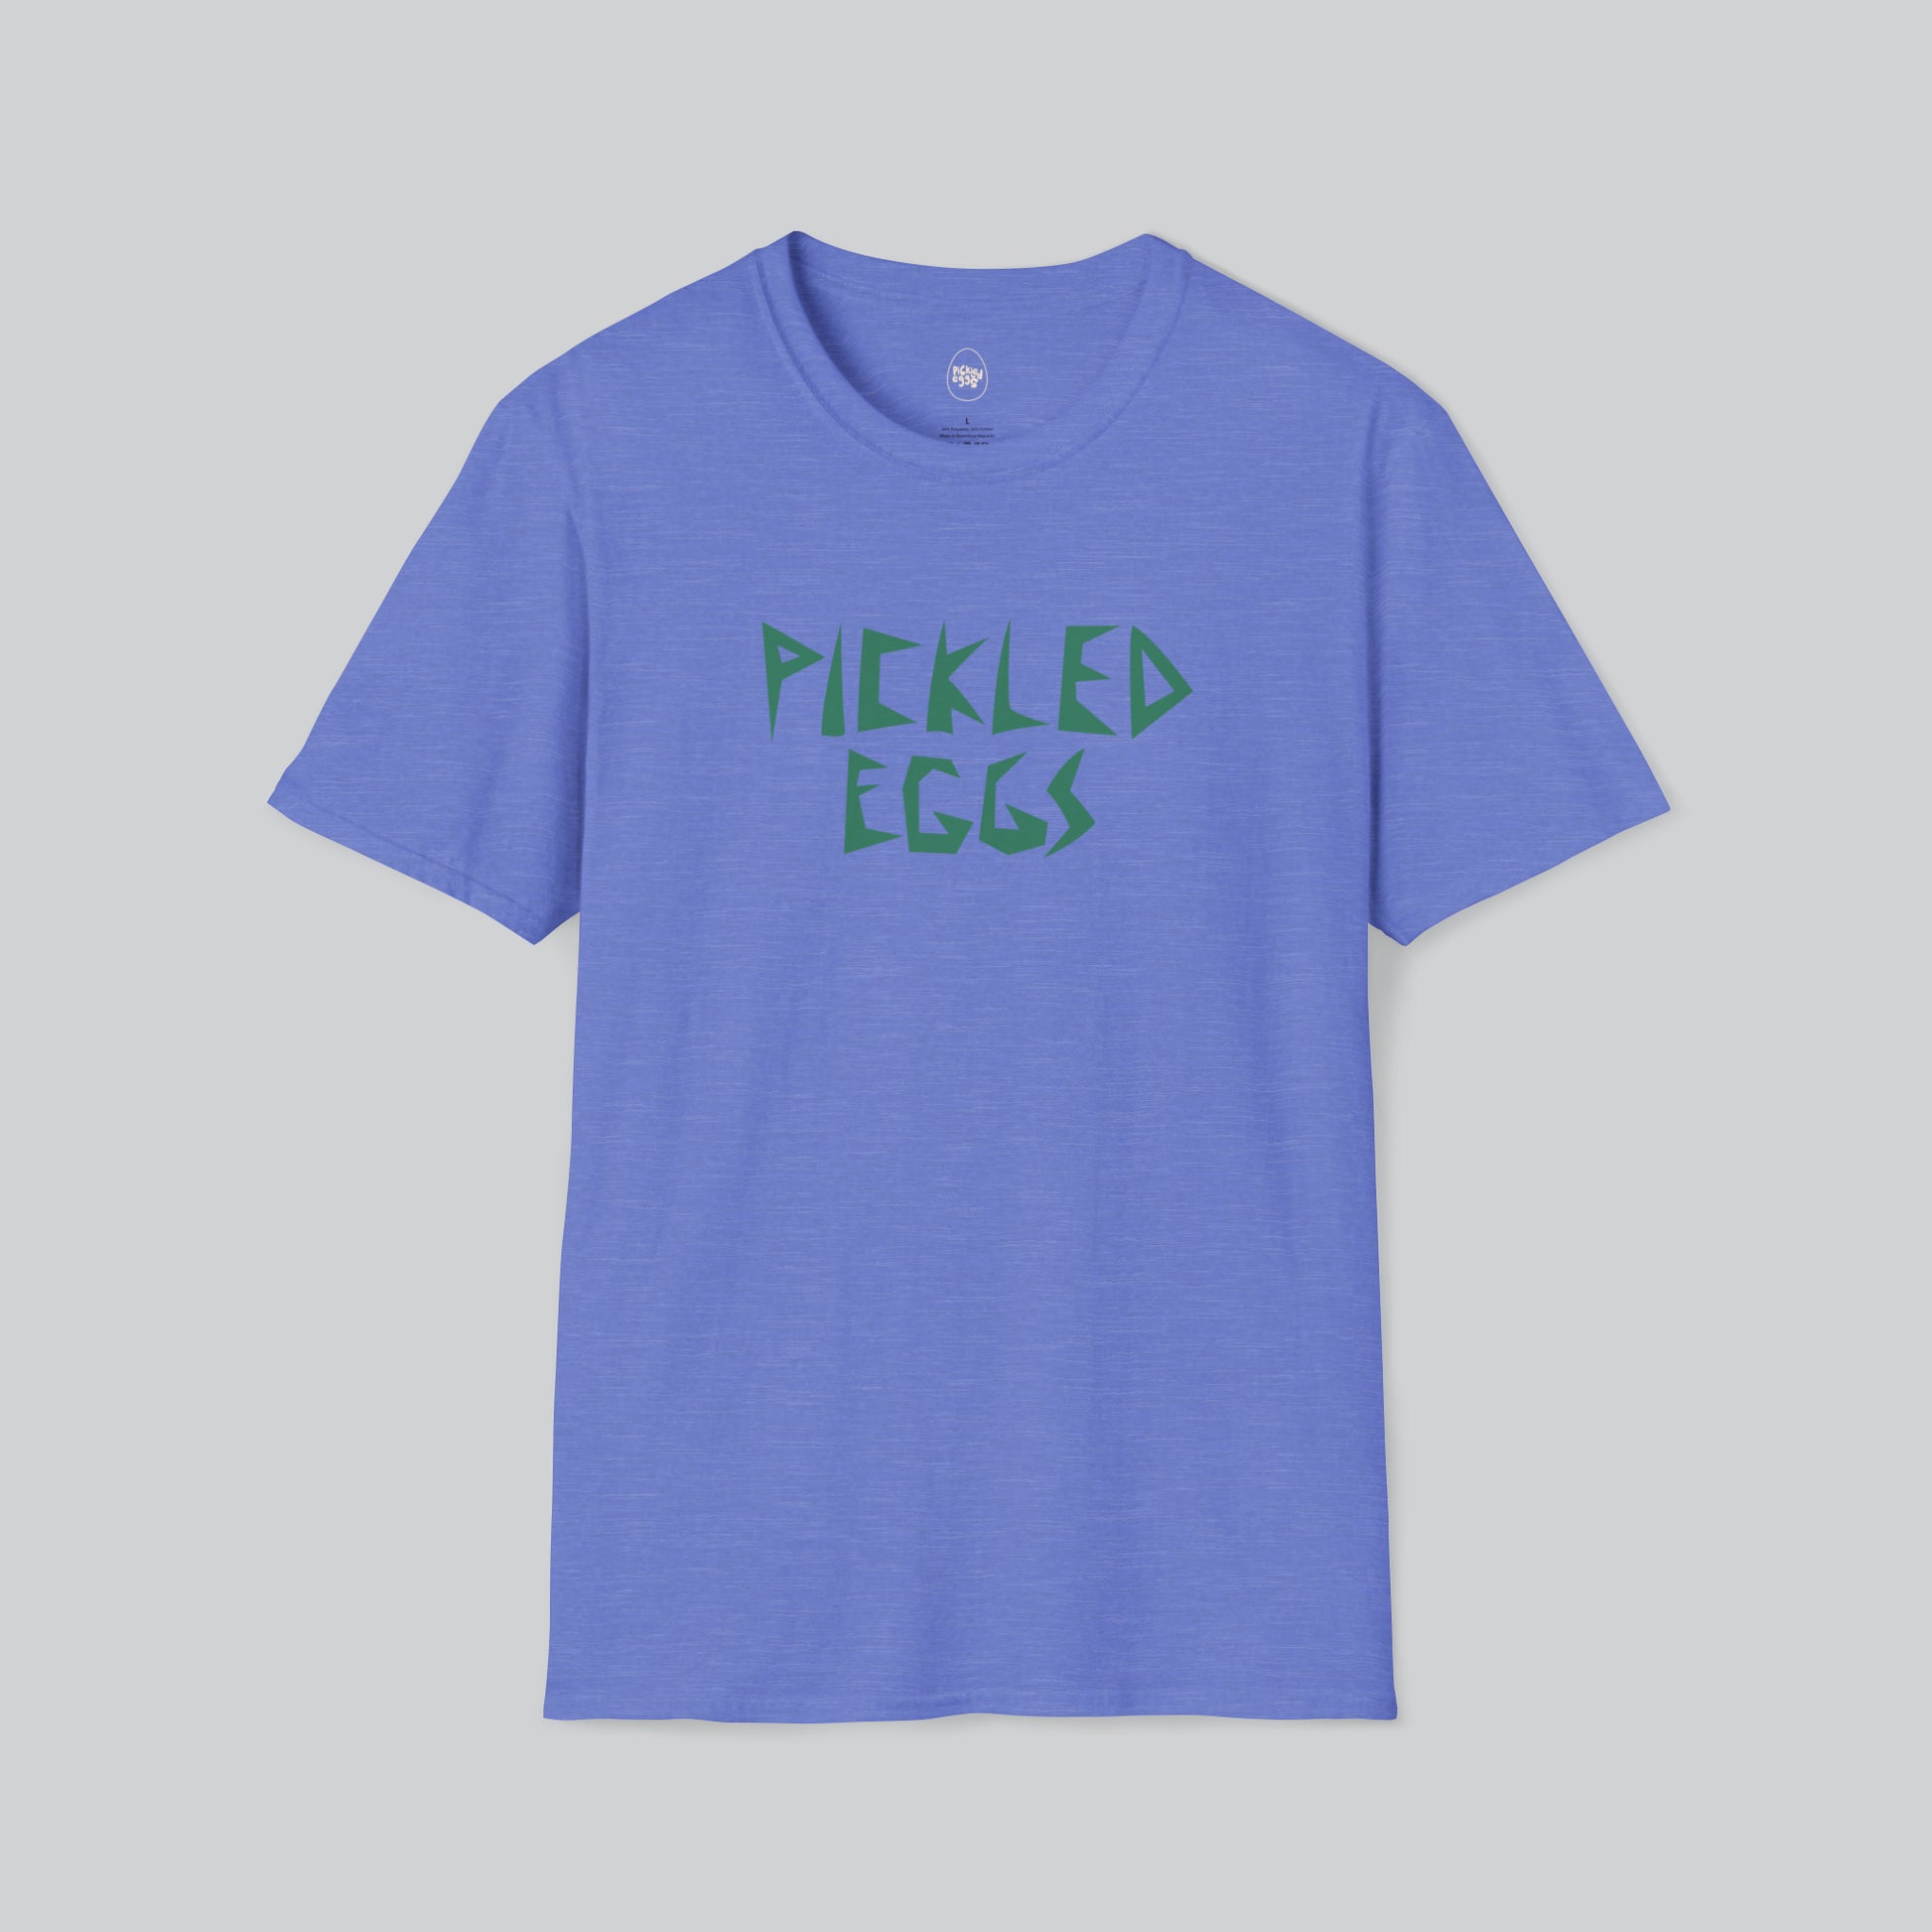 Dive Bars | Pickled Eggs | Pickled Tendencies Blue Tshirt